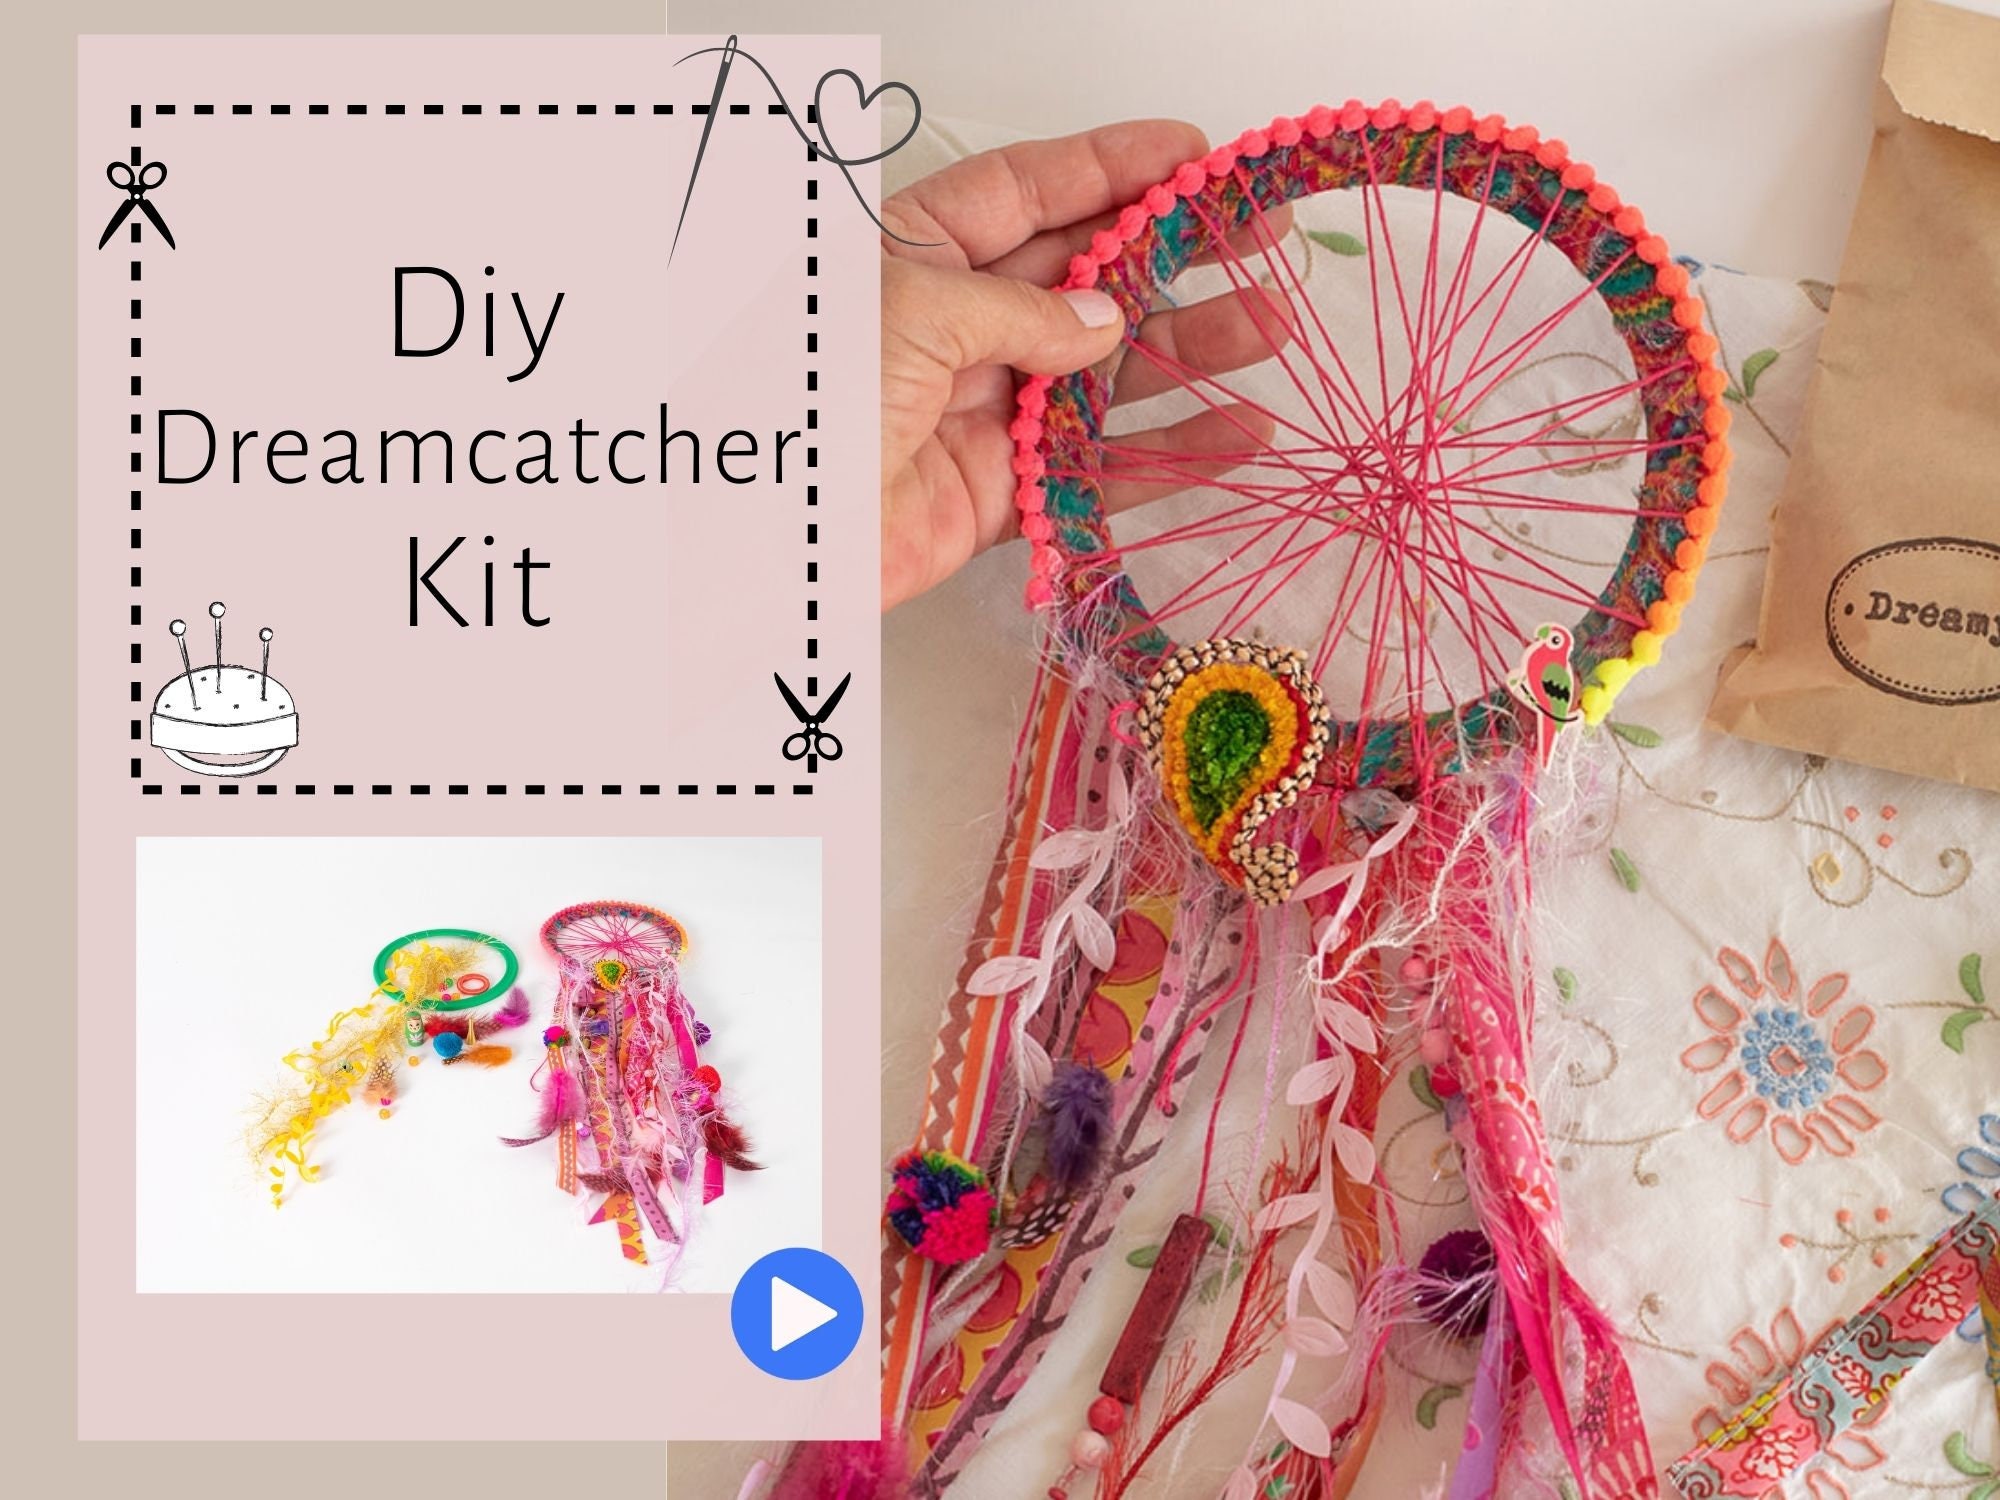 make your own dreamcatcher craft kit activity box - sustainable craft kit -  cotton twist